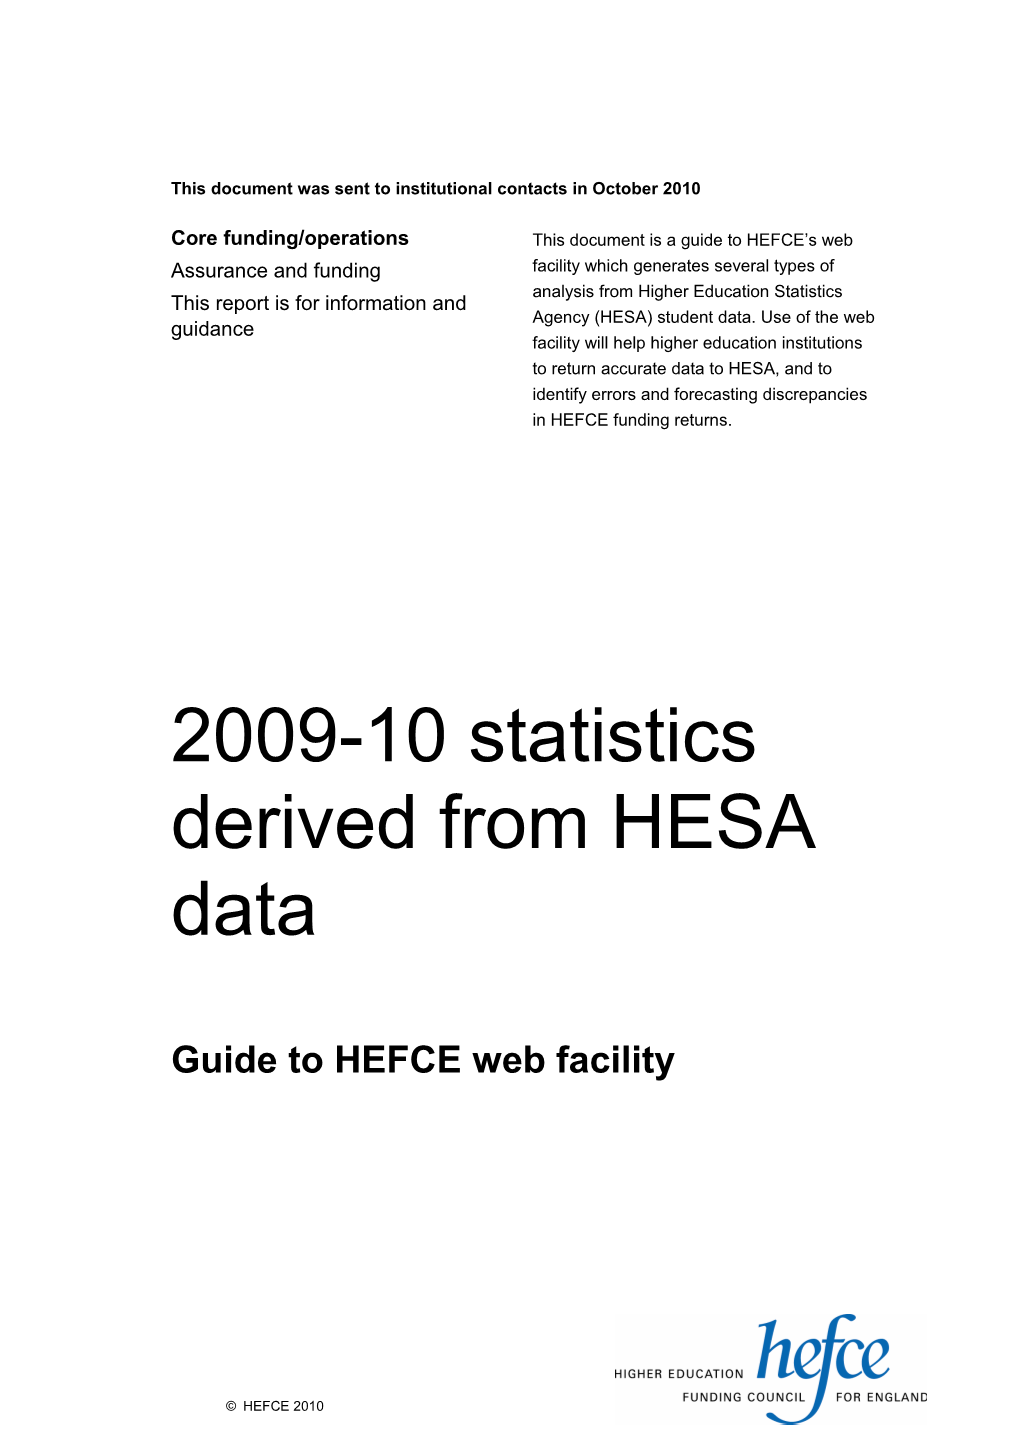 2007-08 Statistics Derived from HESA Data